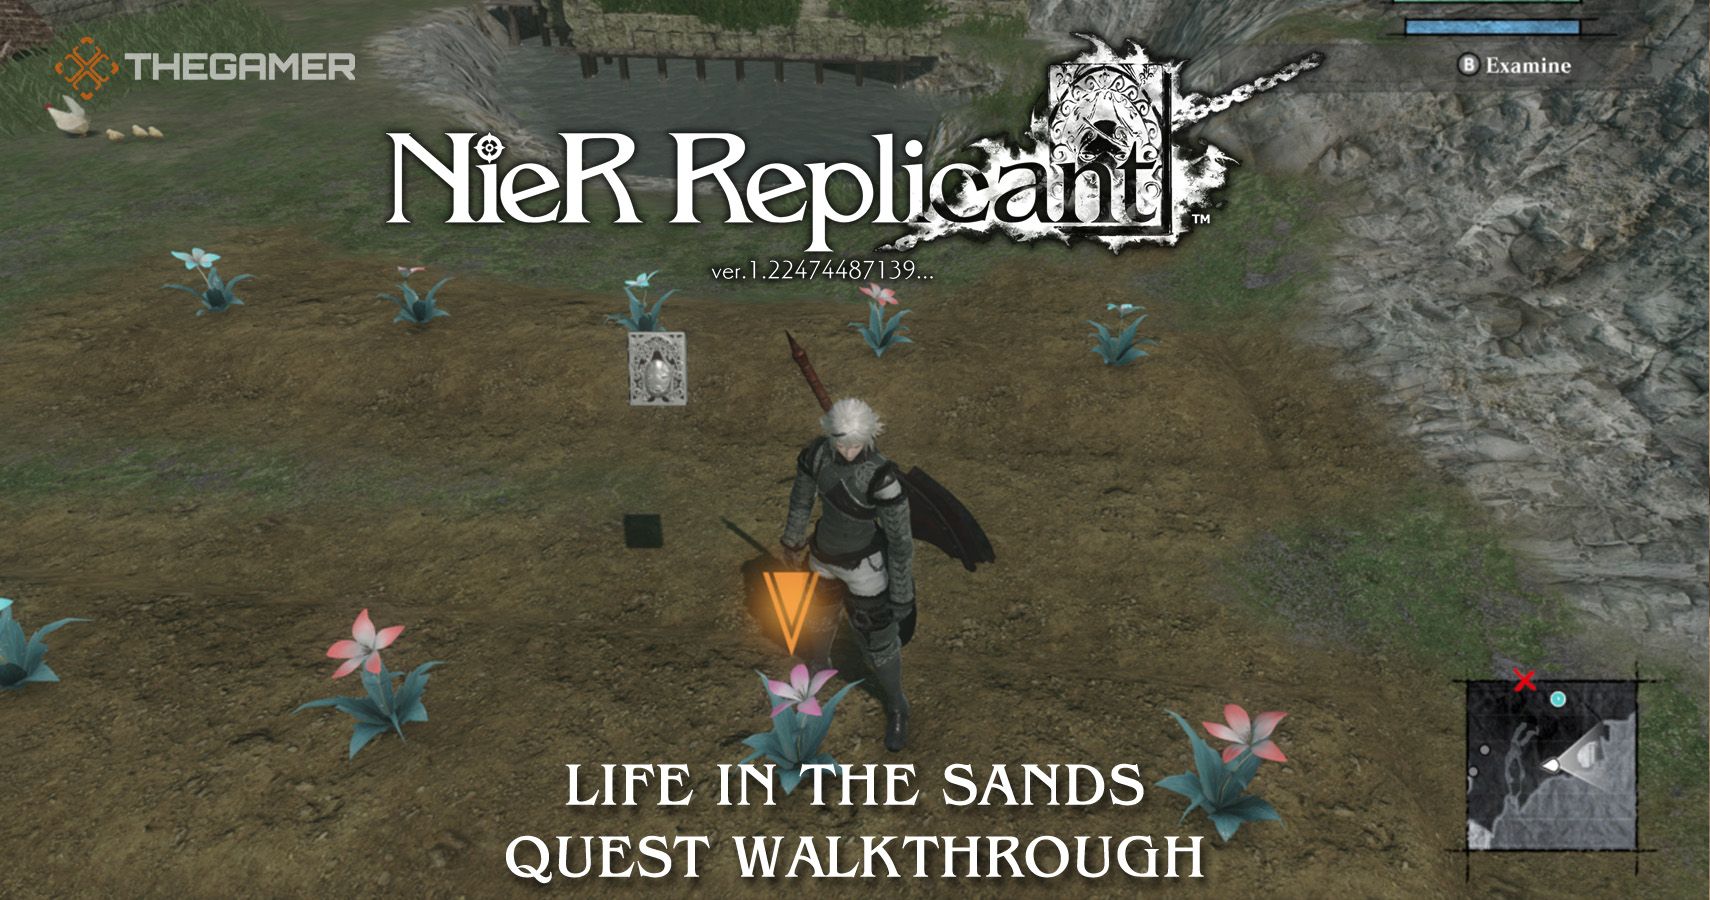 Nier Replicant Side Quests guide - quest walkthroughs, locations & rewards